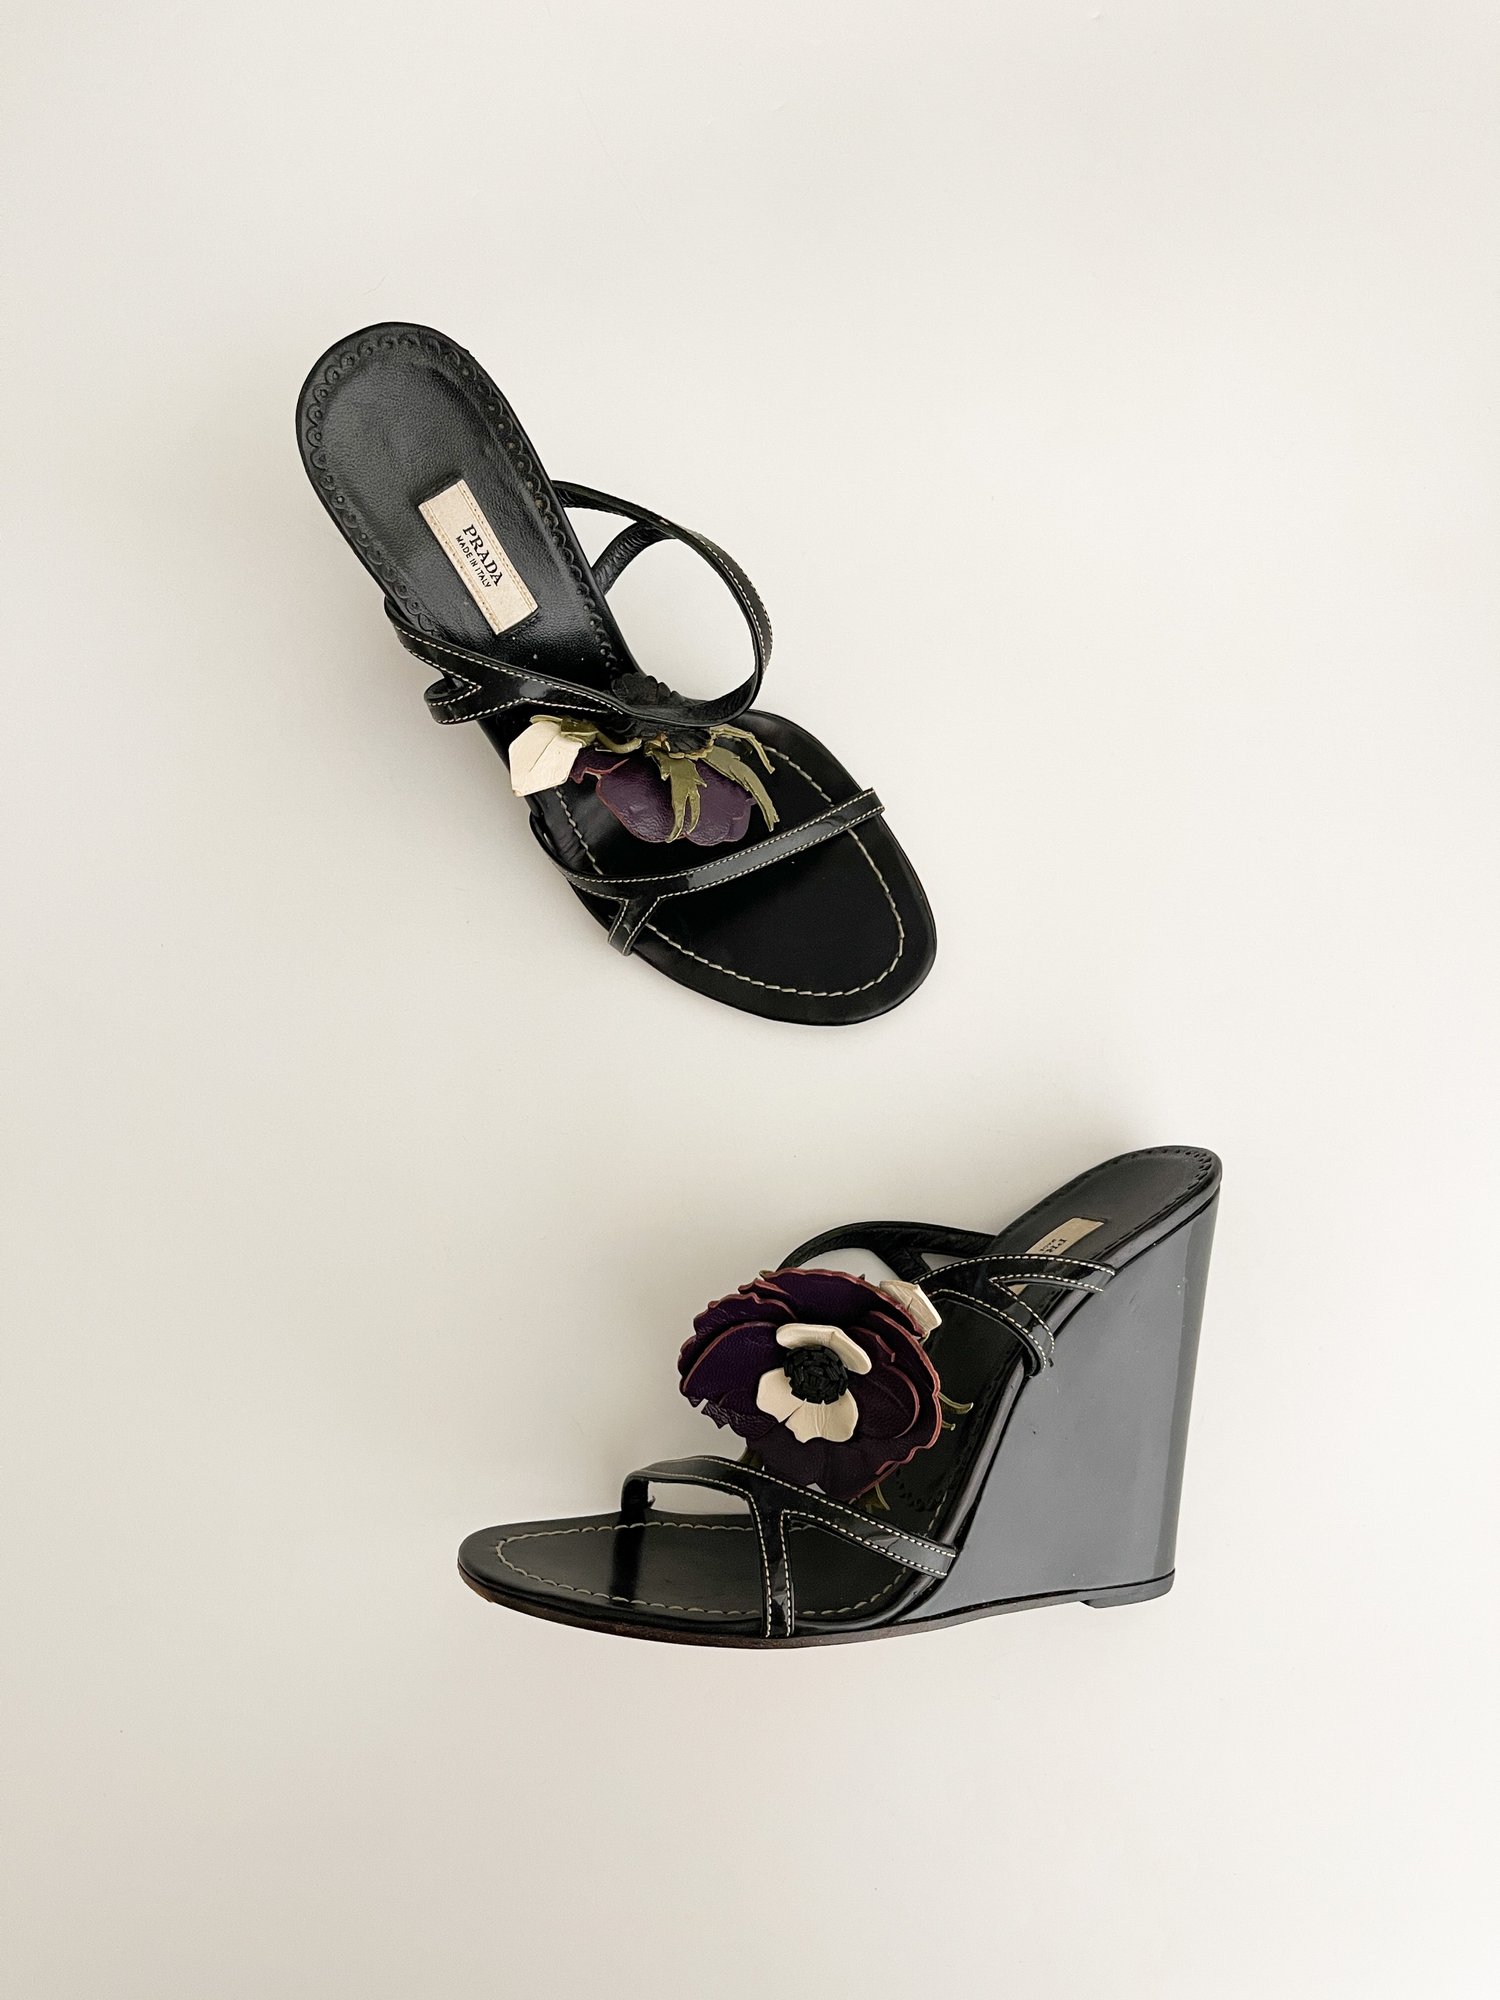 Prada Purple Flower Black Patent Leather Wedge Heels (US 7 / IT 37 